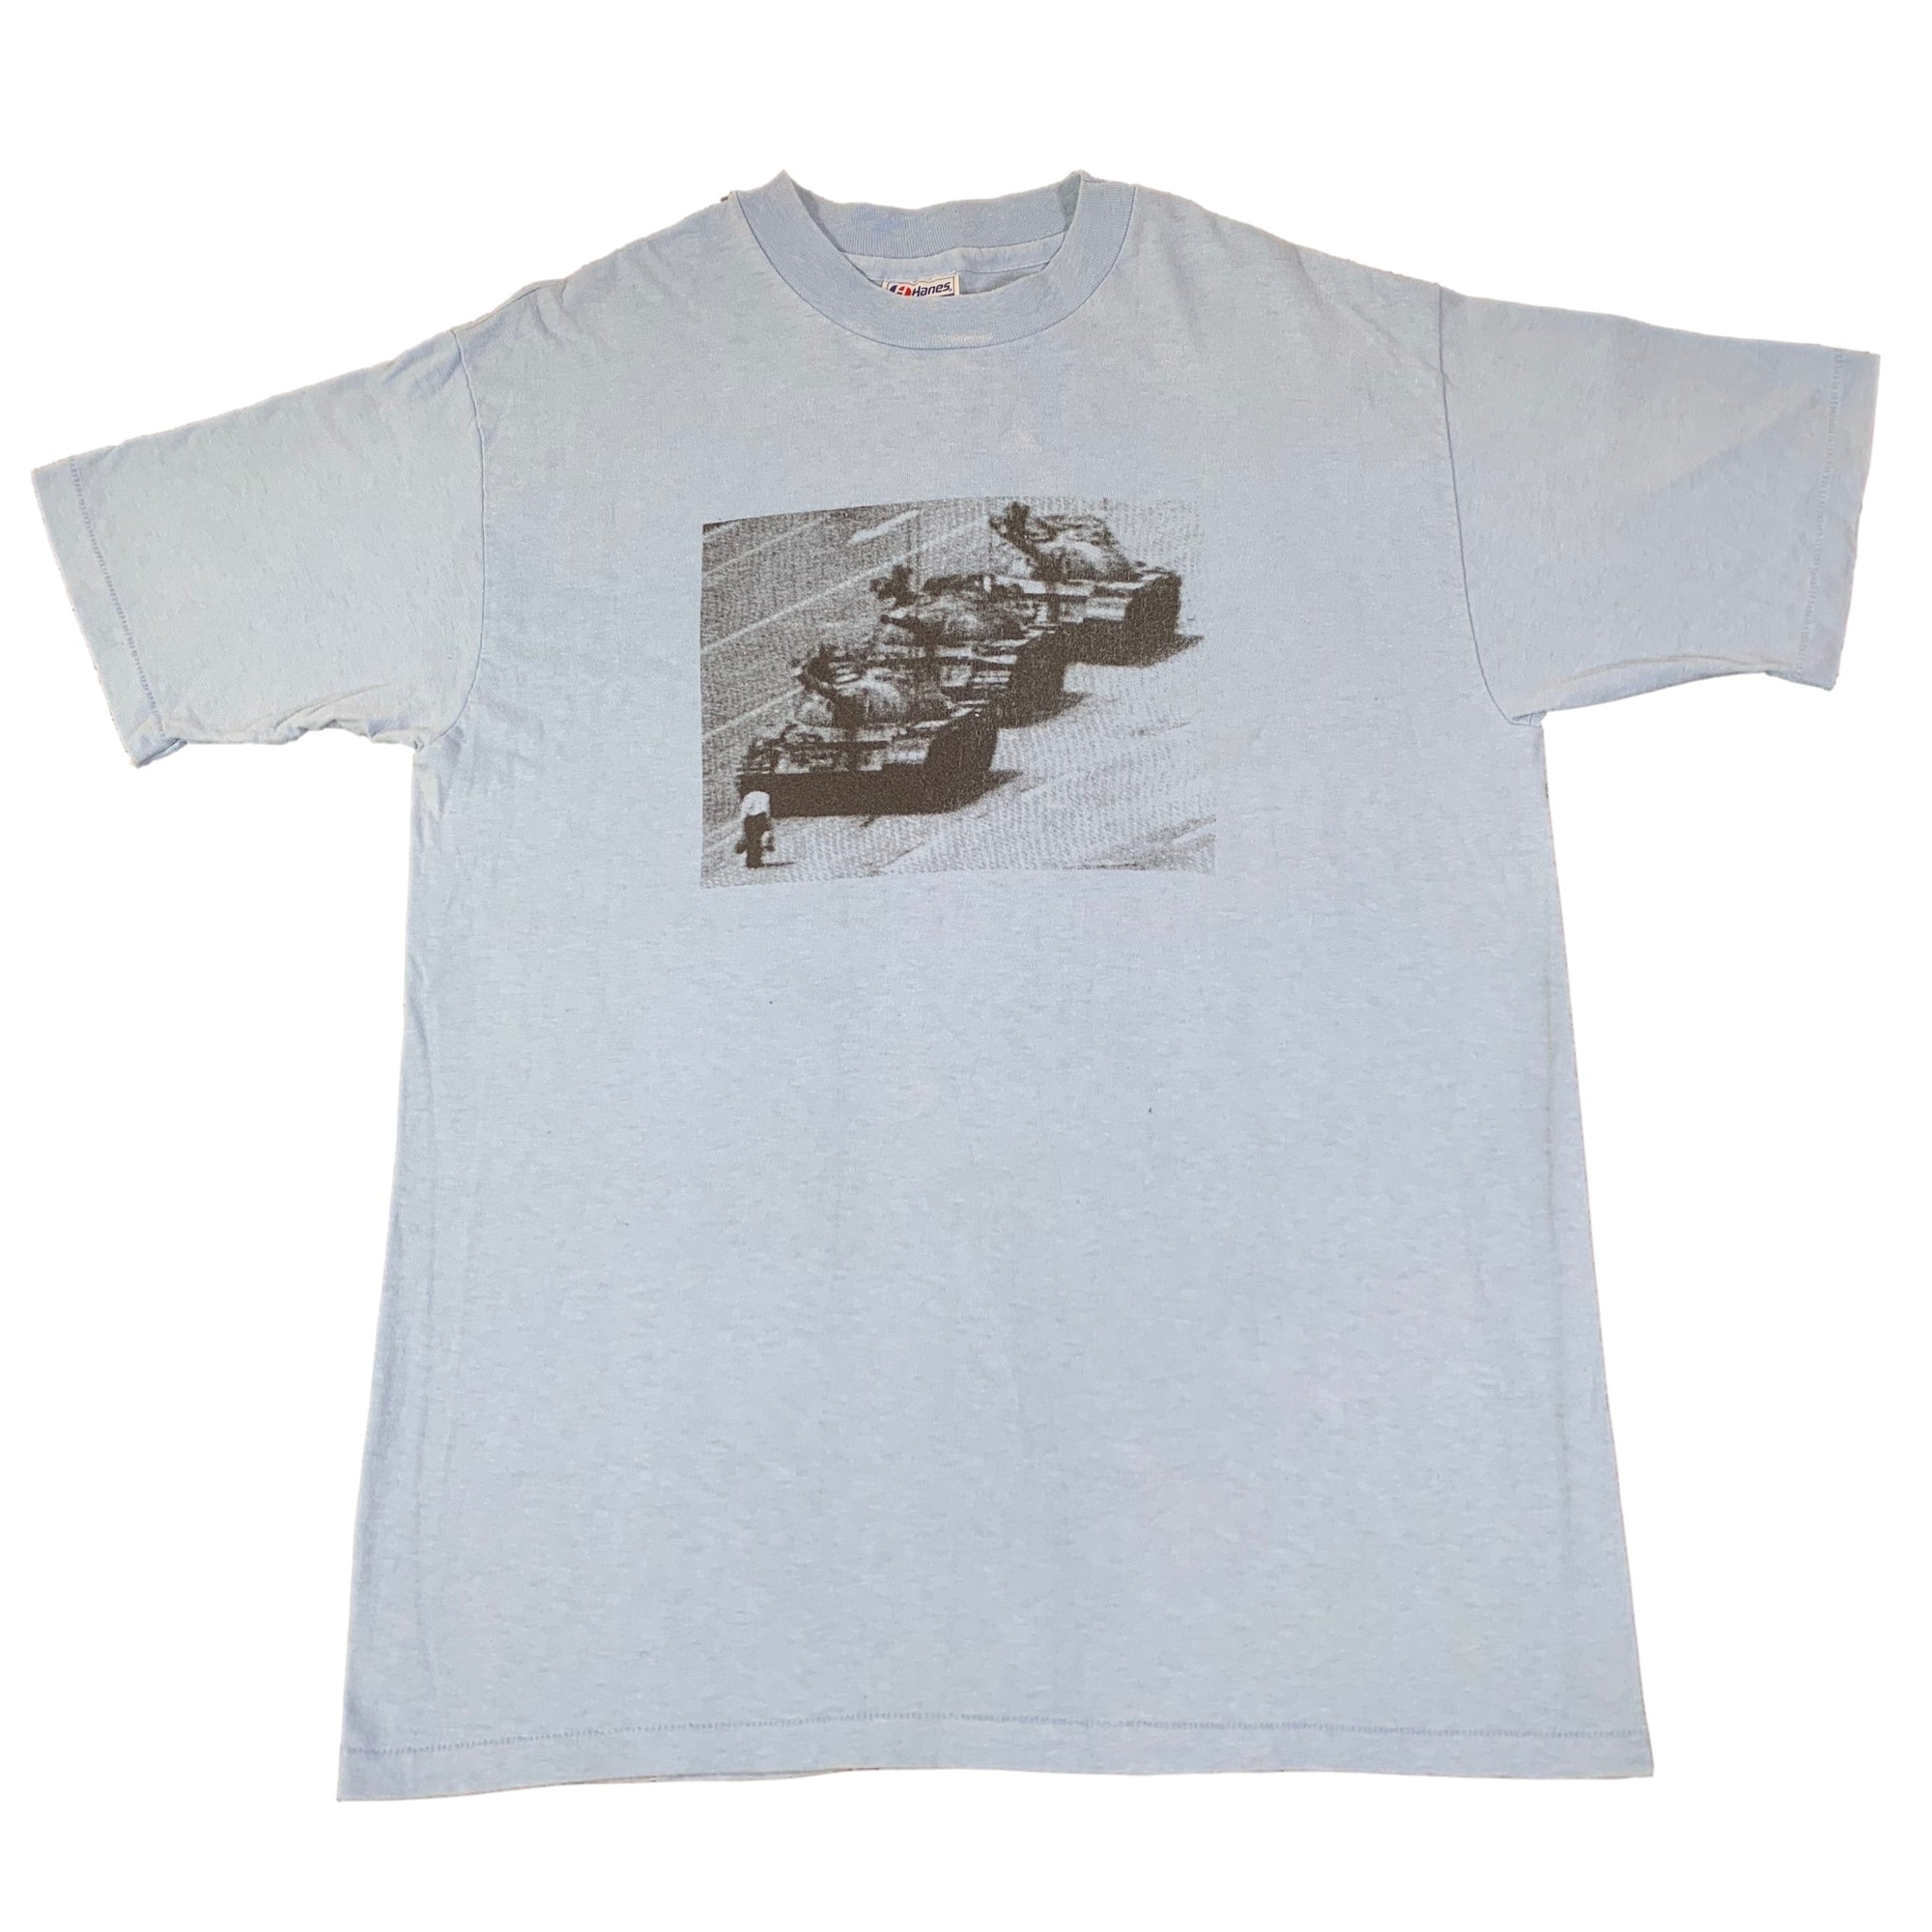 Vintage Tiananmen Square Massacre "Give Me Liberty Or Give Me Death" T-Shirt - jointcustodydc